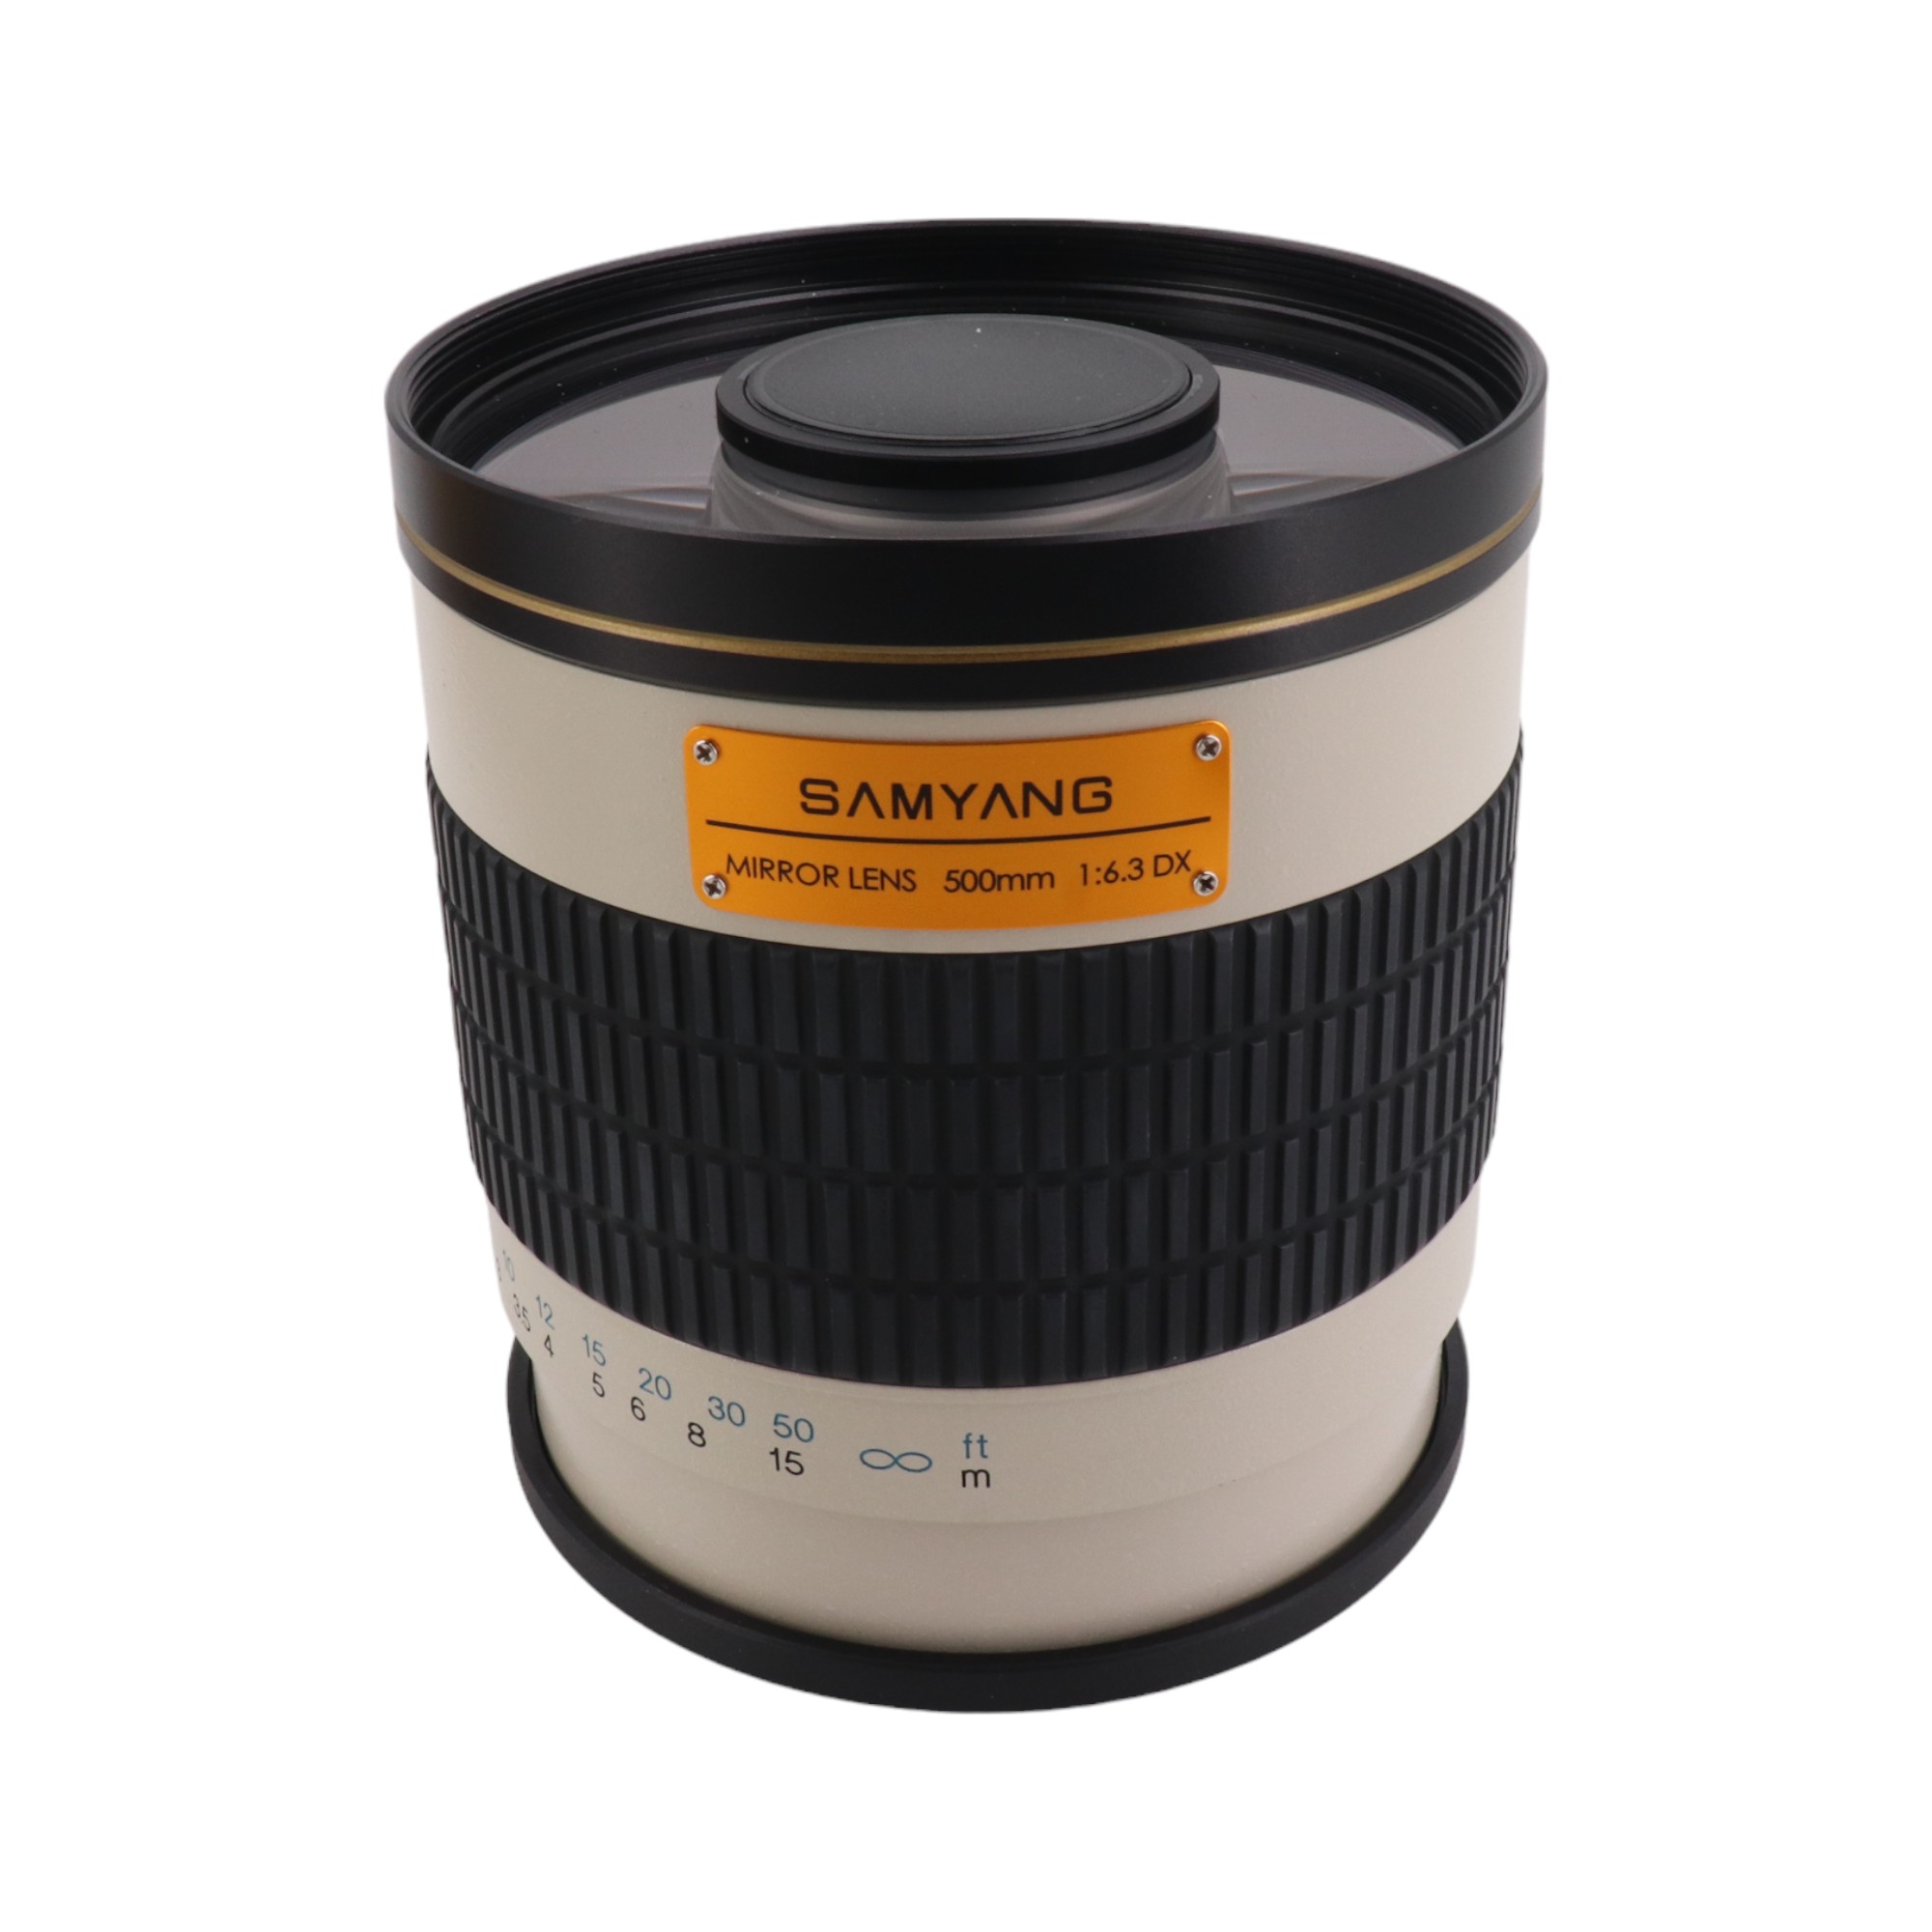 A Samyang camera Mirror Lens 500mm 1:6.3 DX - Image 2 of 2